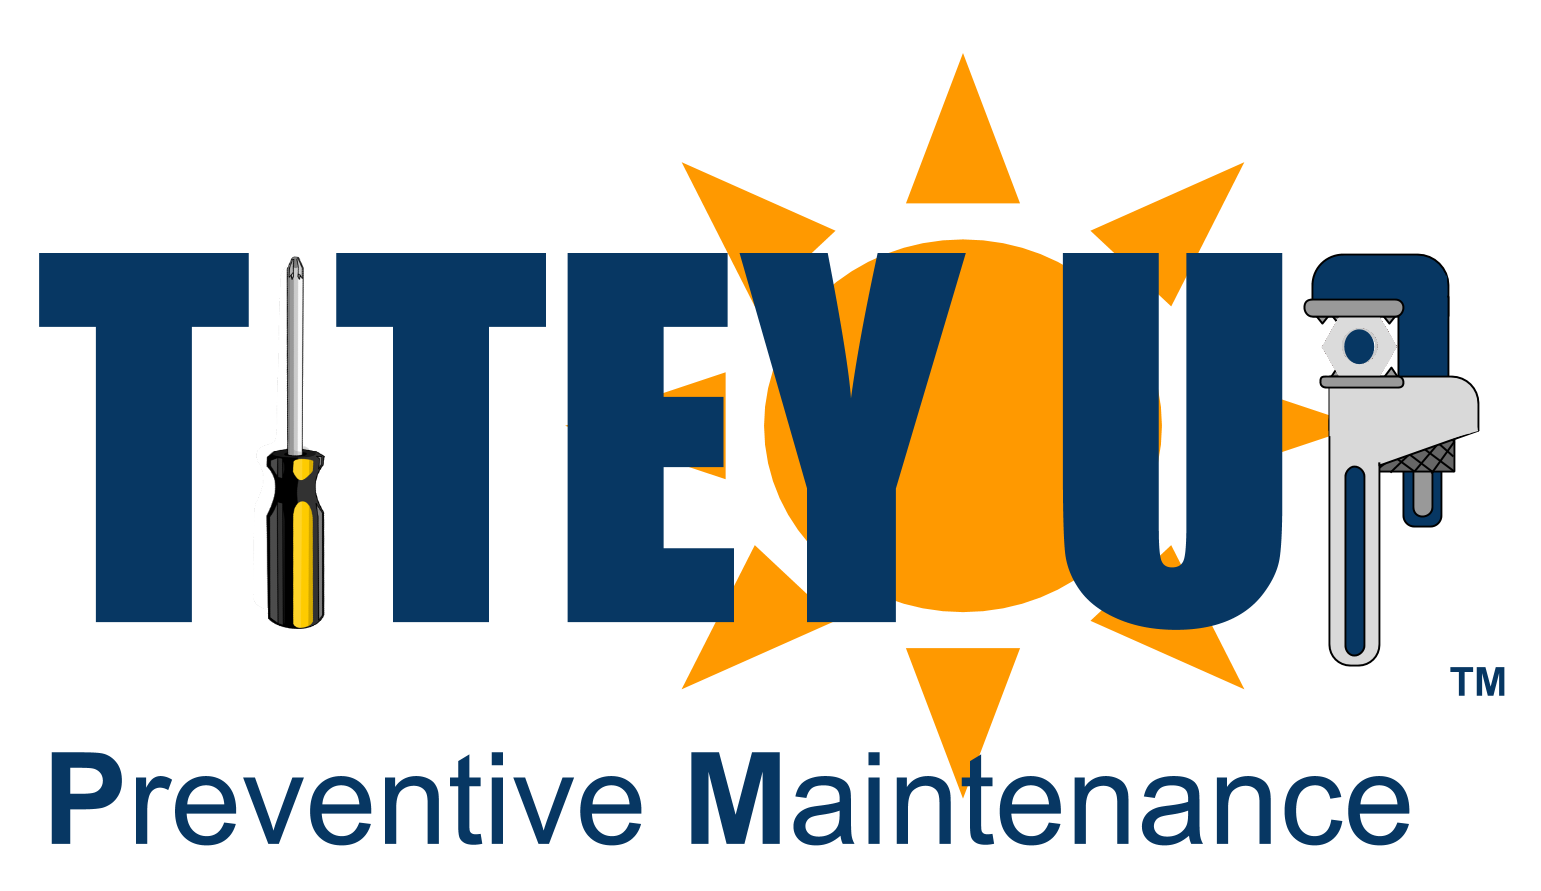 TITEYUP PM (Preventive Maintenance)